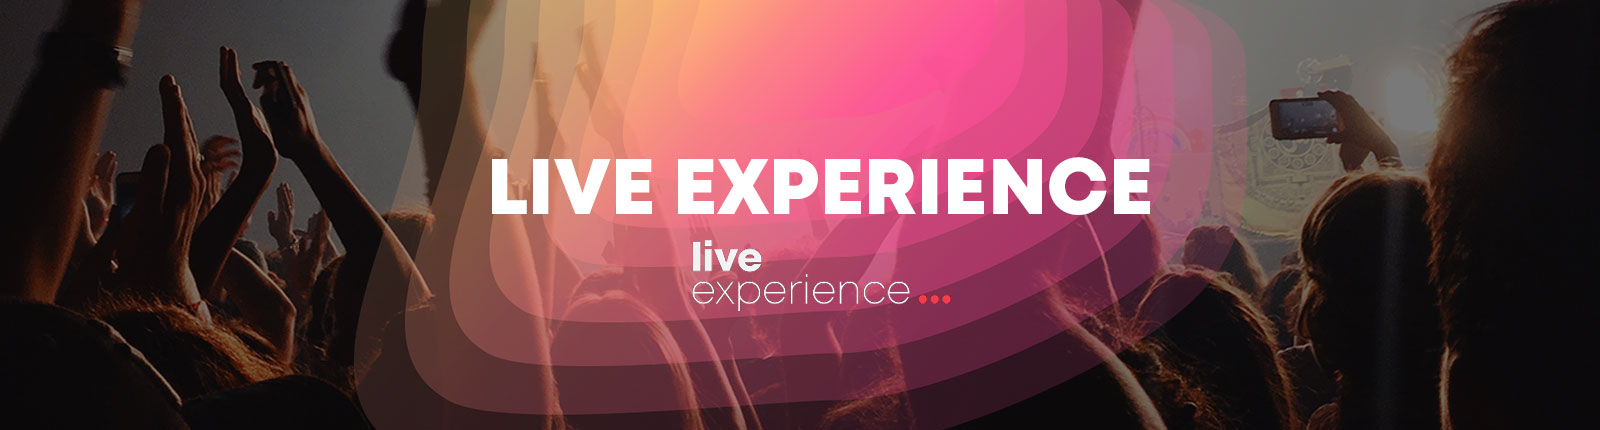 headerimage_liveexperience